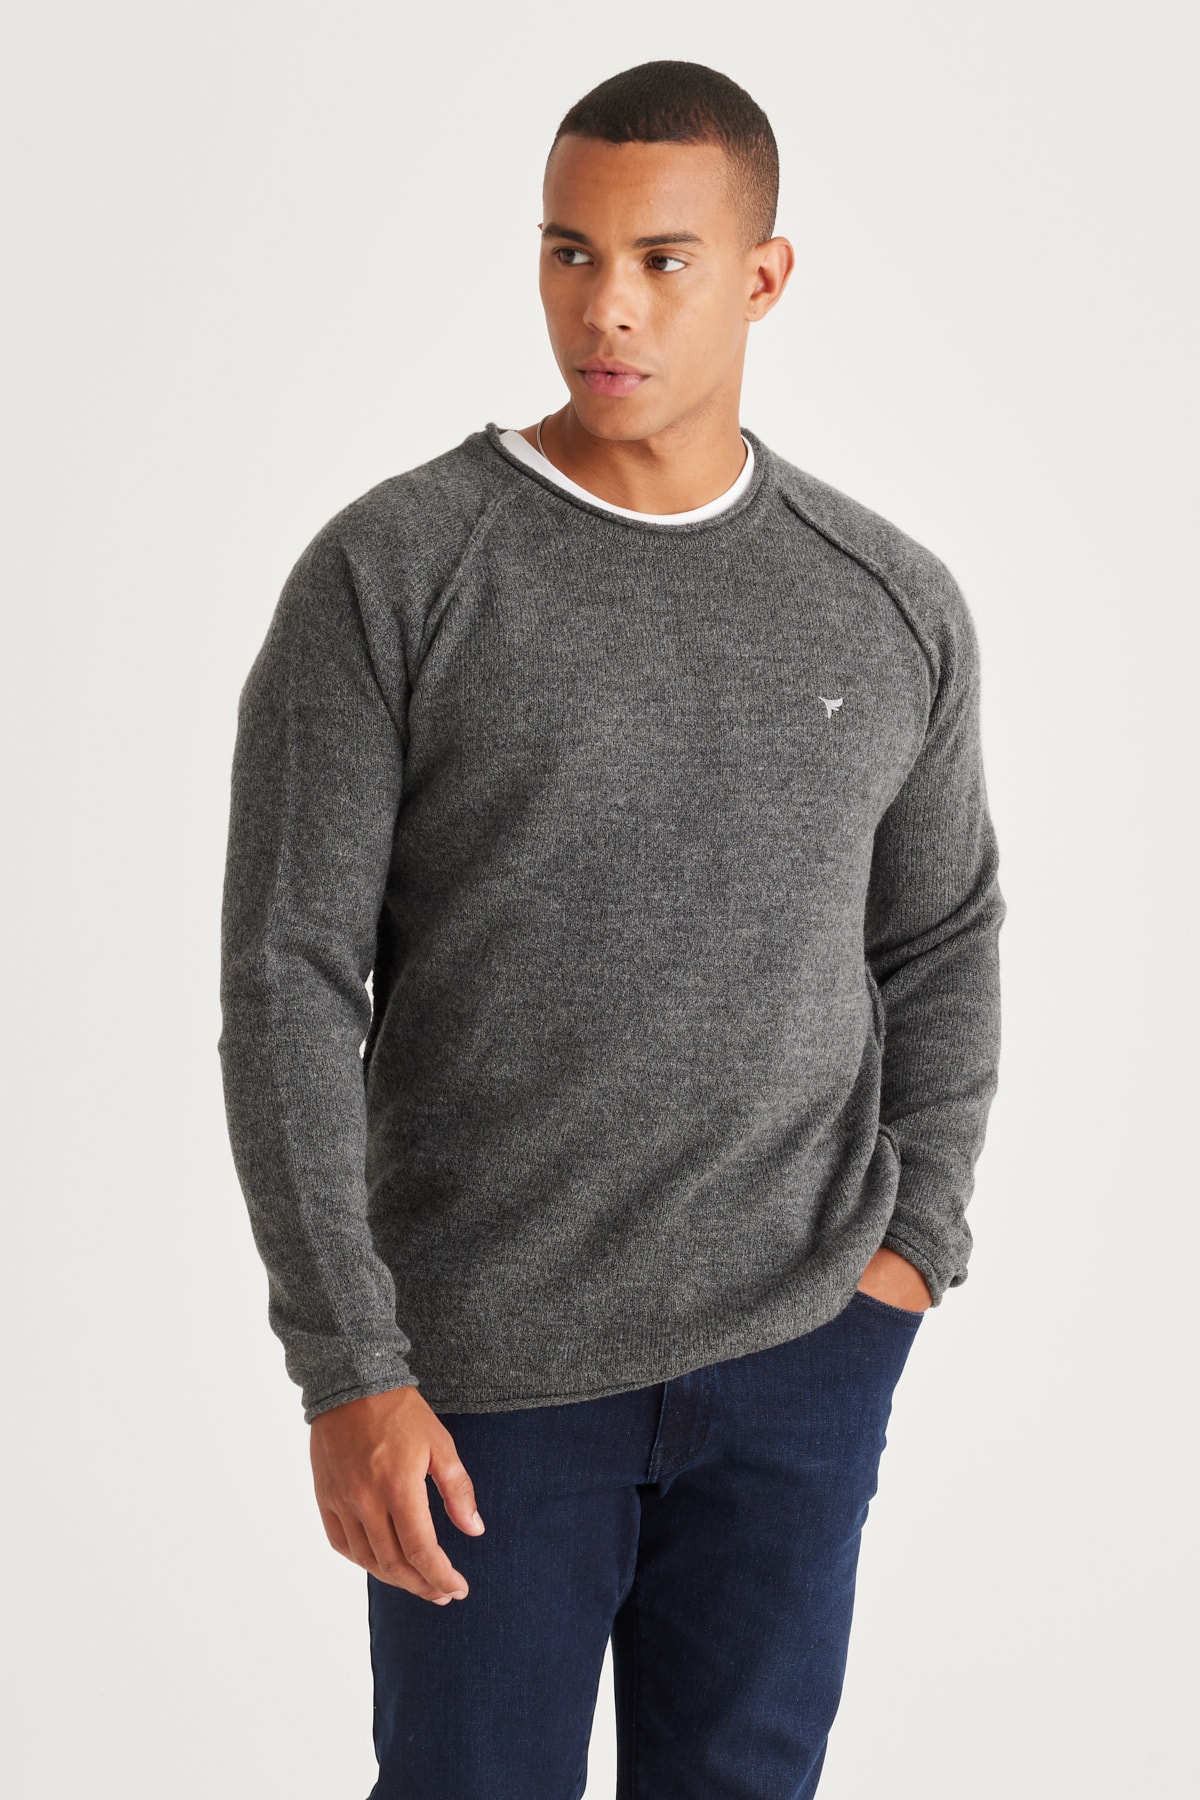 AC&Co / Altınyıldız Classics Men's Anthracite Standard Fit Regular Cut Crew Neck Ruffled Soft Textured Knitwear Sweater